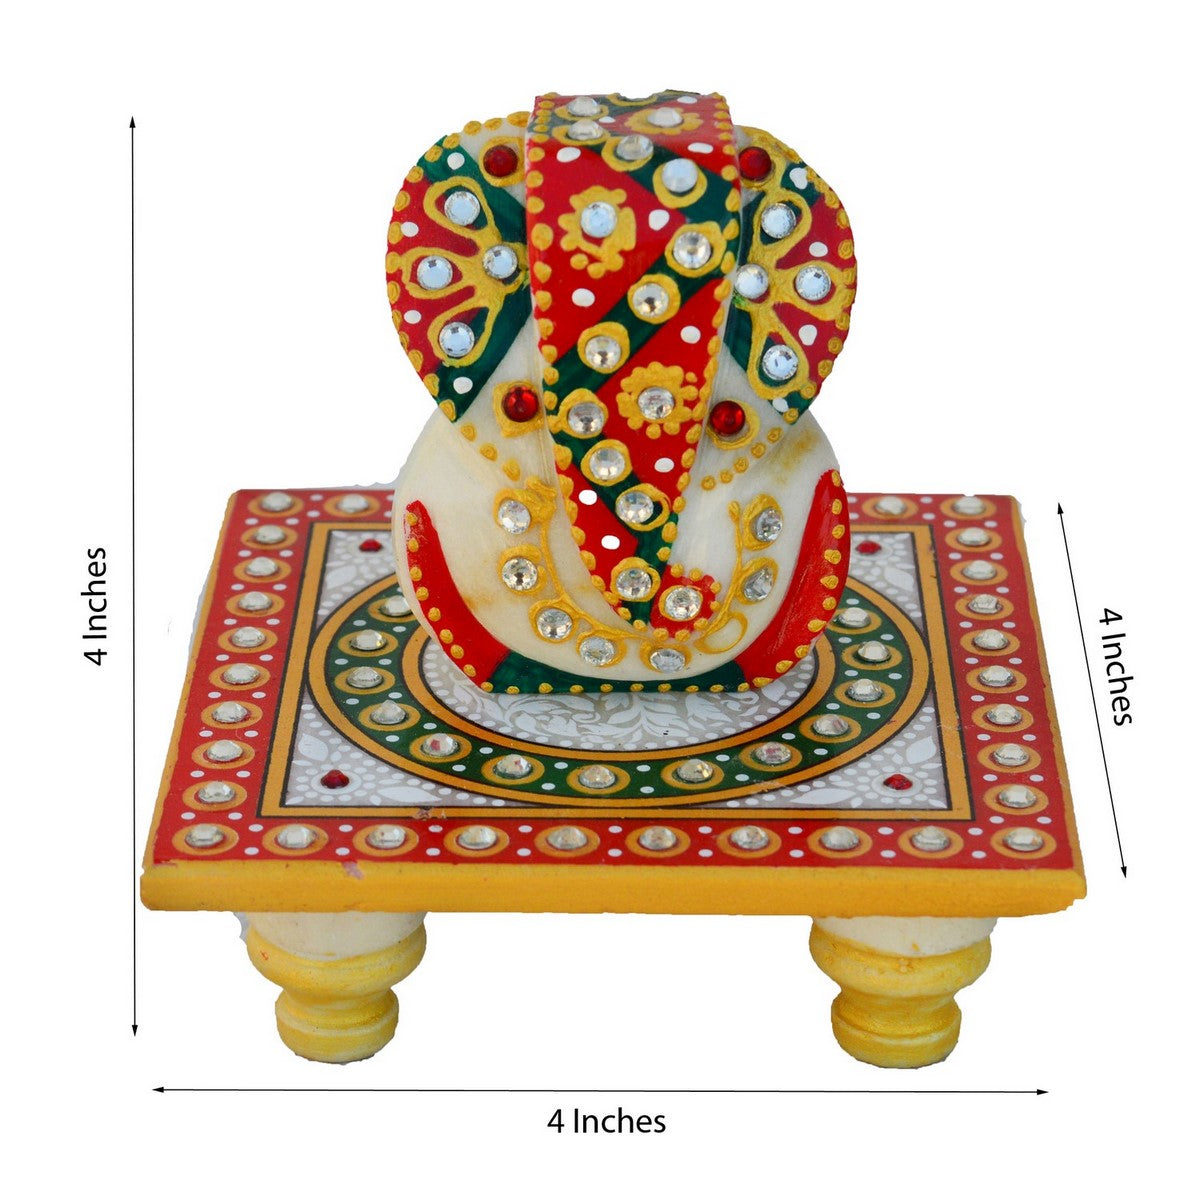 Designer Meenakari Rakhi with Lord Ganesha on Kundan Studded Marble Chowki and Roli Tikka Matki, Best Wishes Greeting Card 1